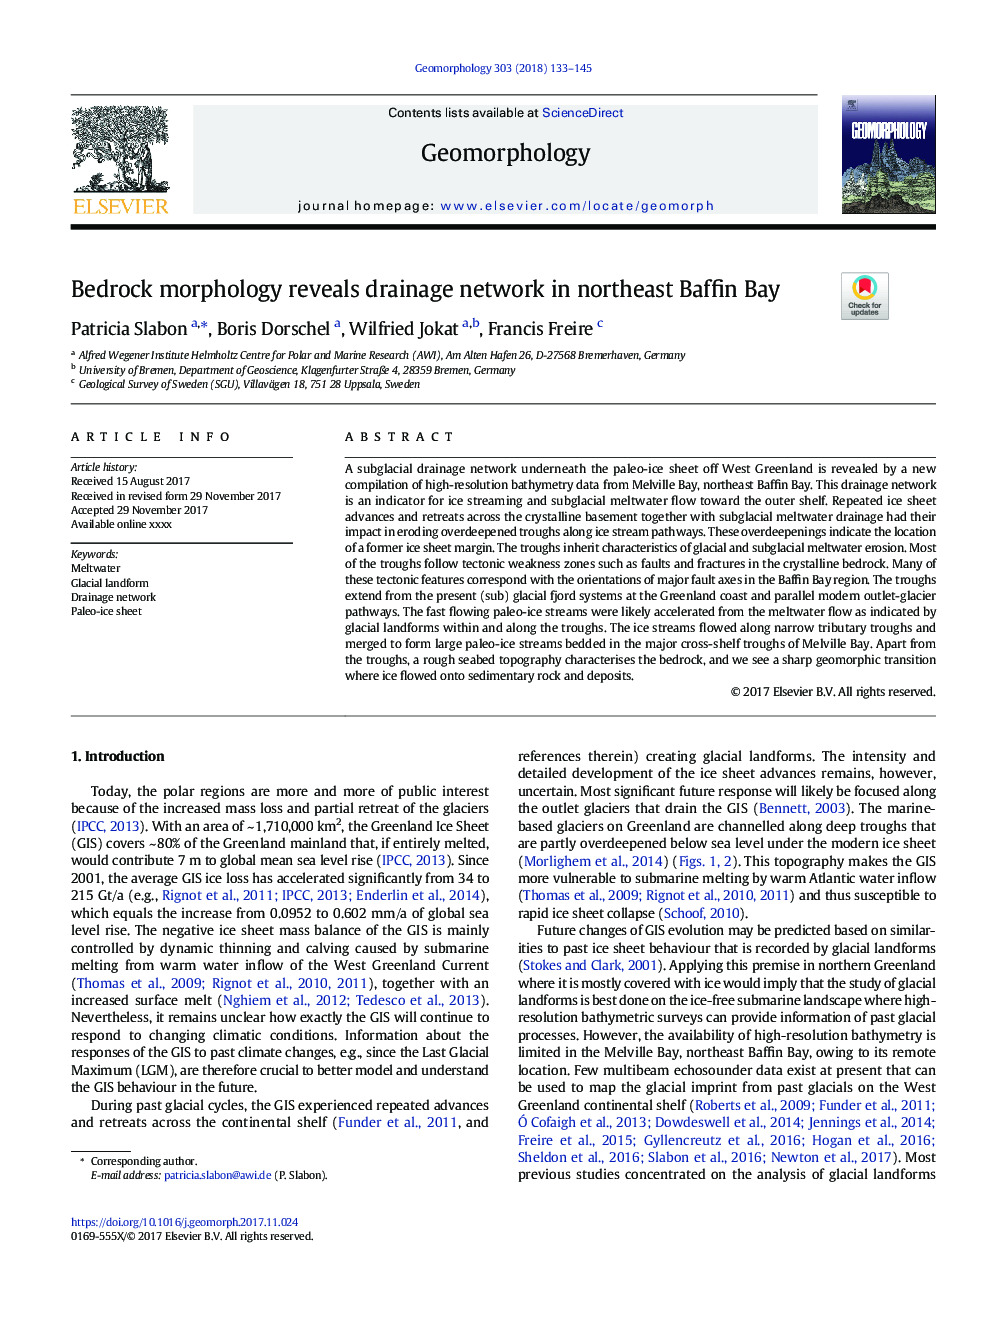 Bedrock morphology reveals drainage network in northeast Baffin Bay